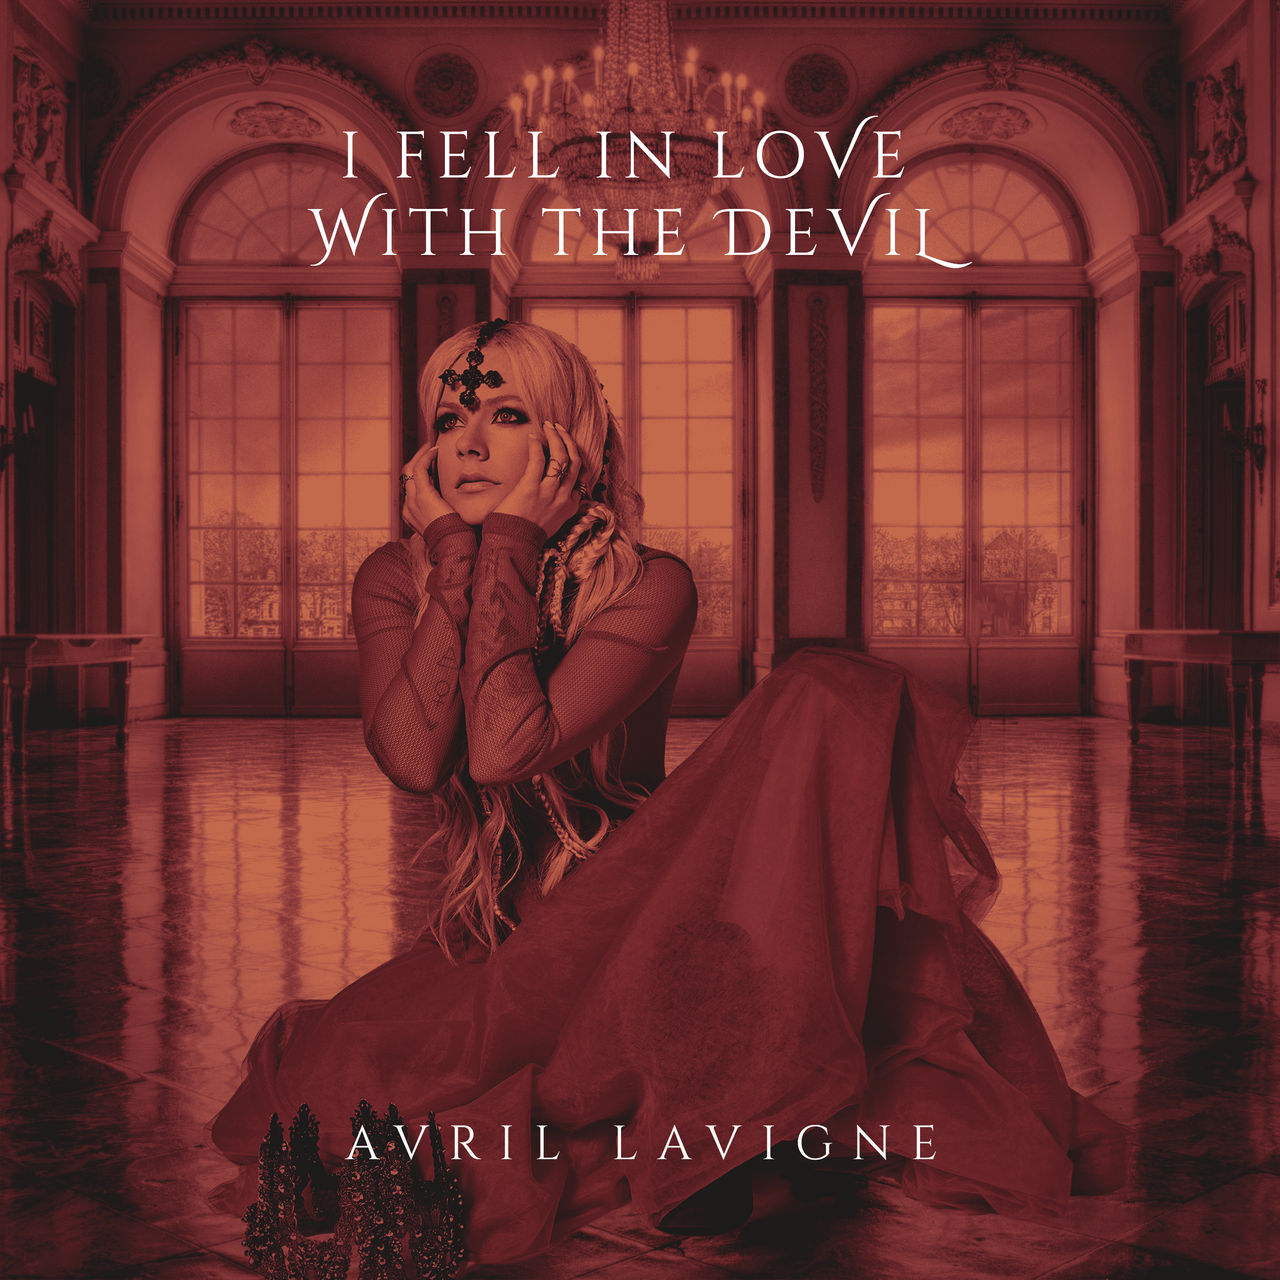 Avril Lavigne Rarities Unreleased Back by KallumLavigne on DeviantArt